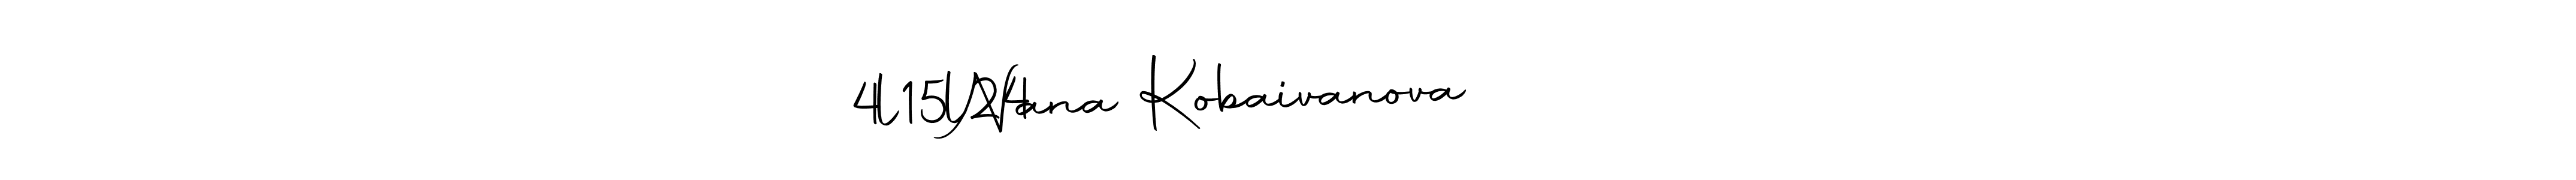 How to Draw Nana Kobaivanova                    4l15l24 signature style? Autography-DOLnW is a latest design signature styles for name Nana Kobaivanova                    4l15l24. Nana Kobaivanova                    4l15l24 signature style 10 images and pictures png